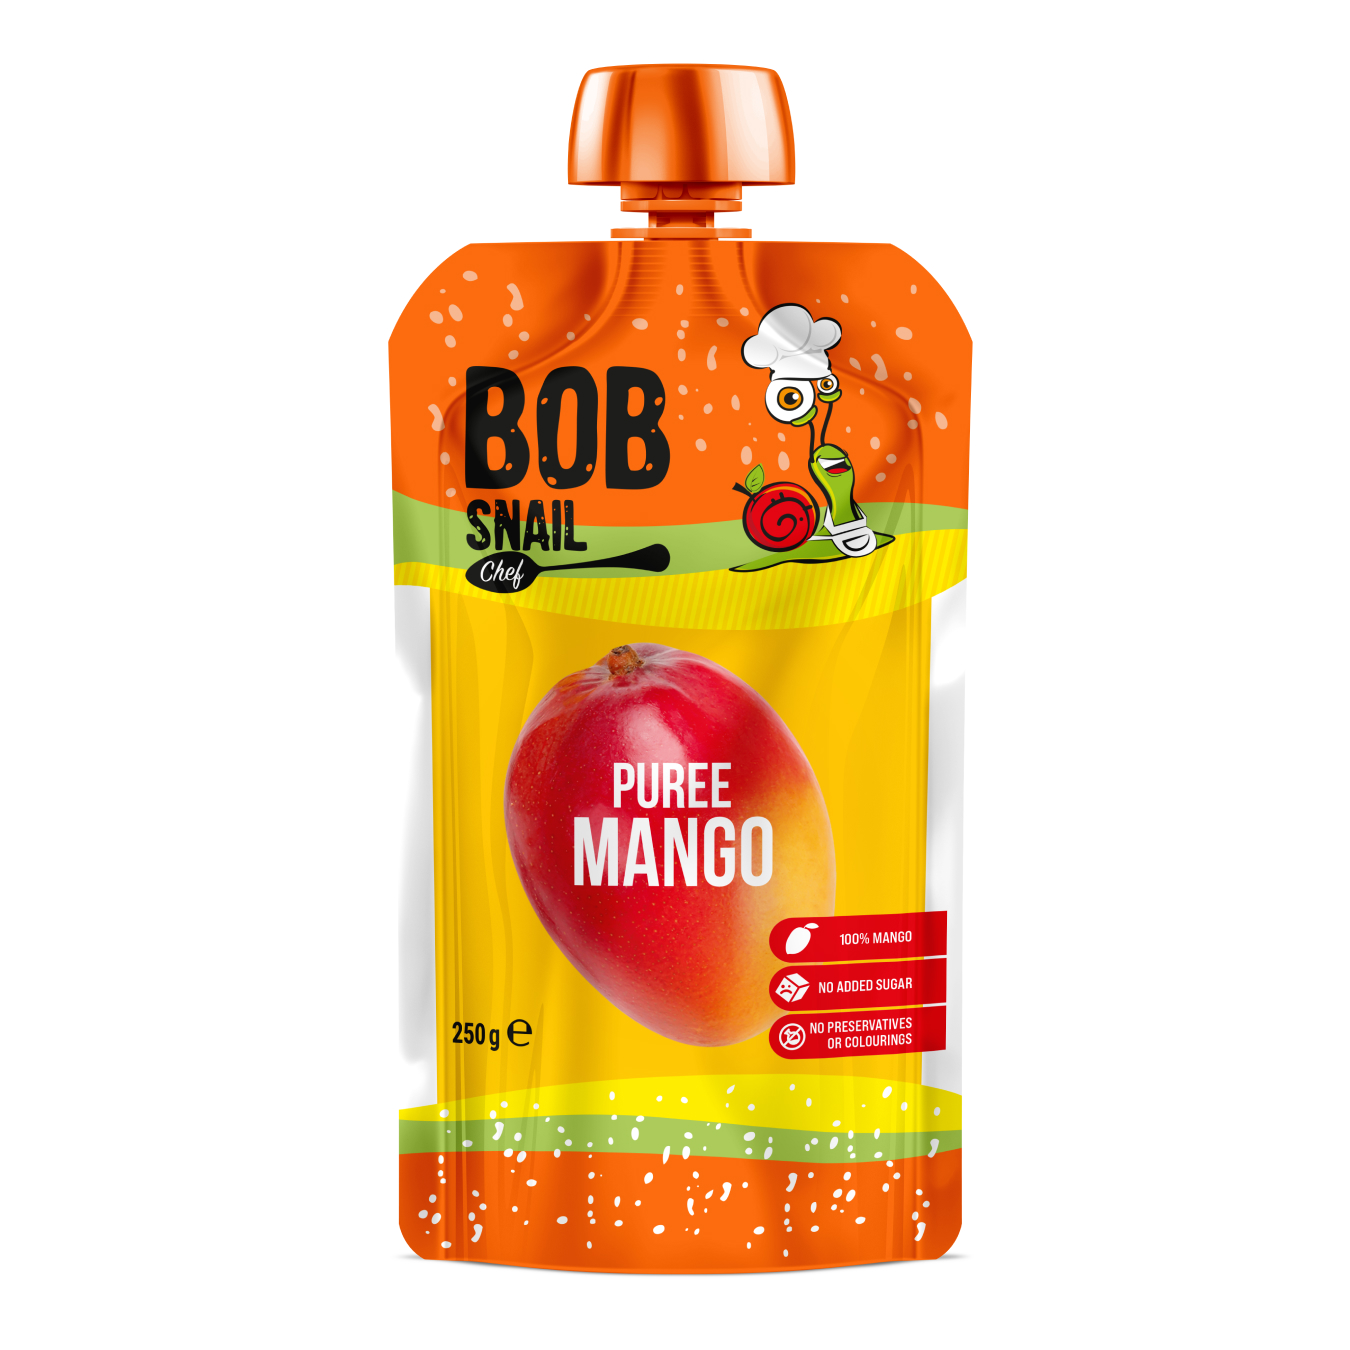 Bob Snail fruit puree Mango pasteurized 250g